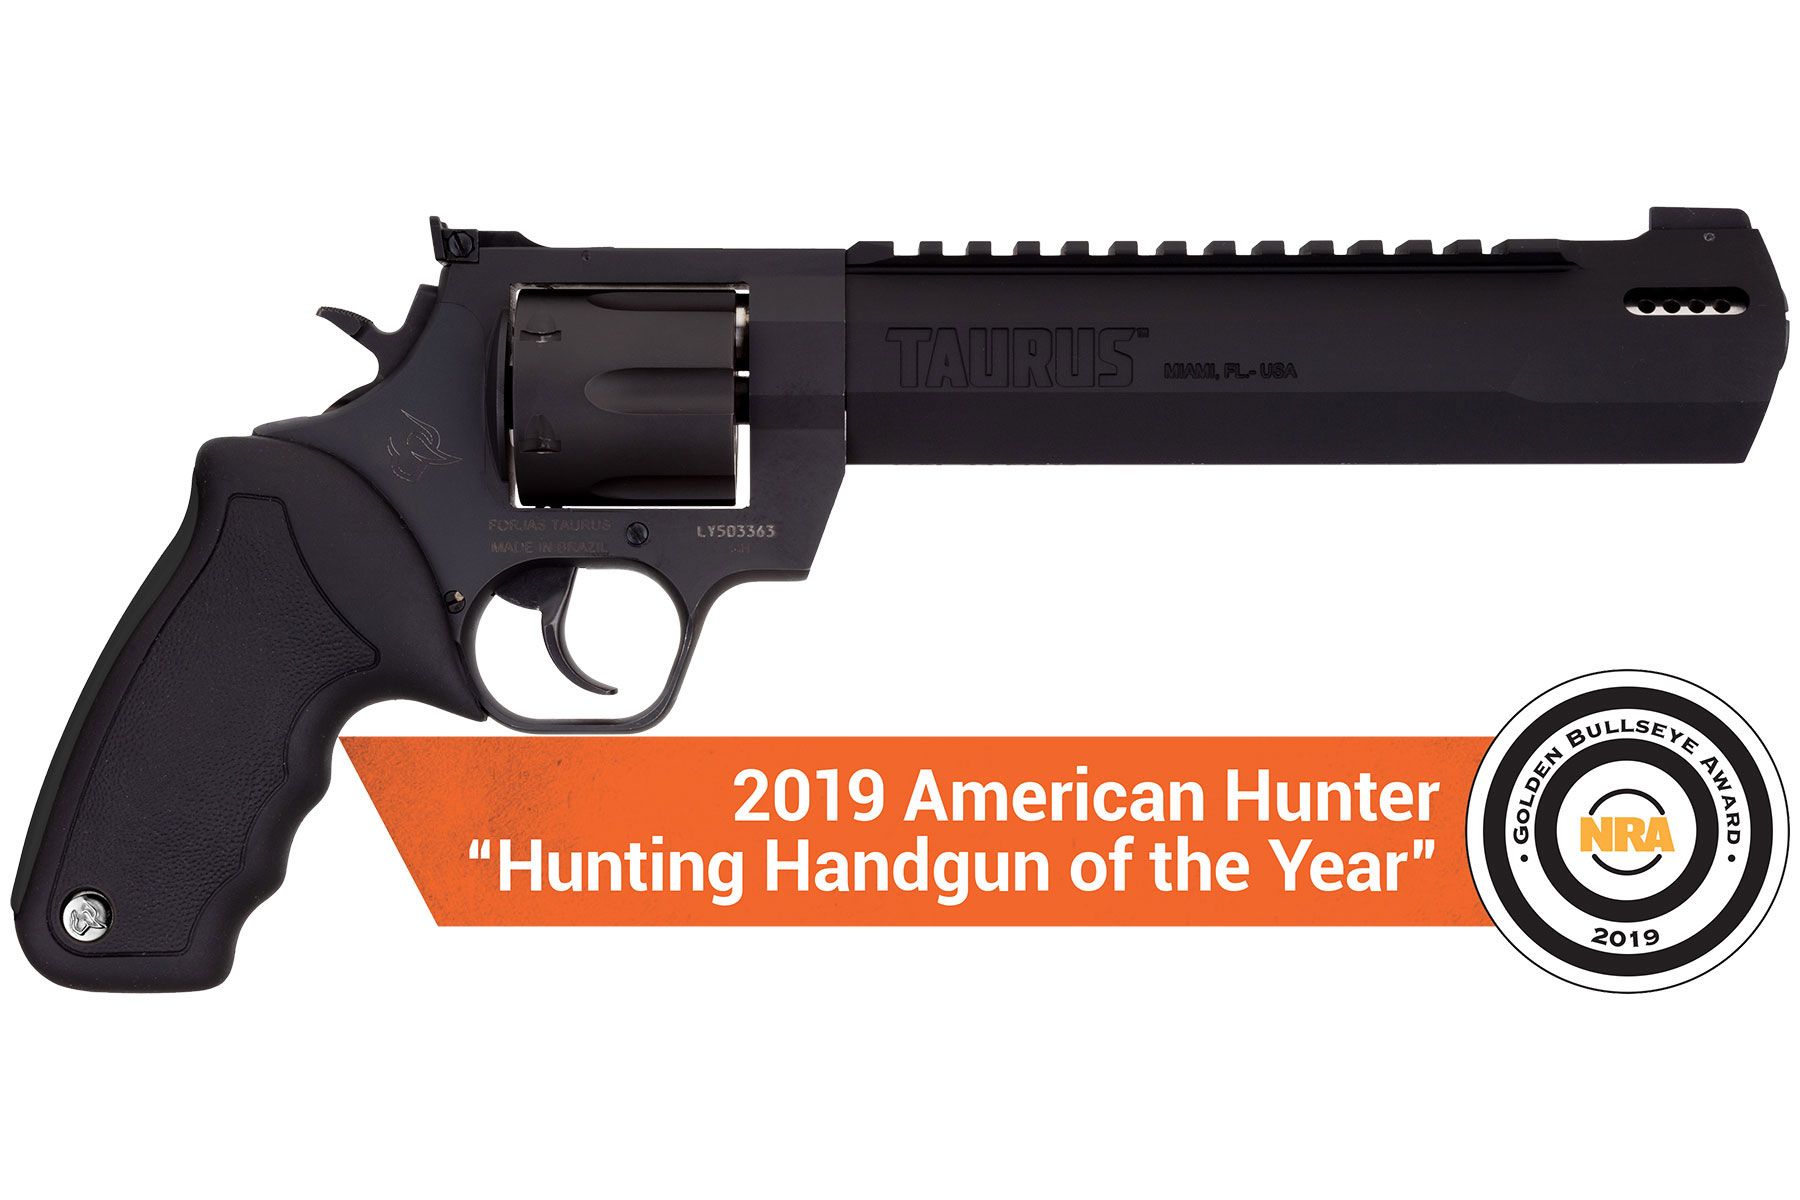 Taurus Raging Hunter - 2019 Golden Bullseye Award Revolver